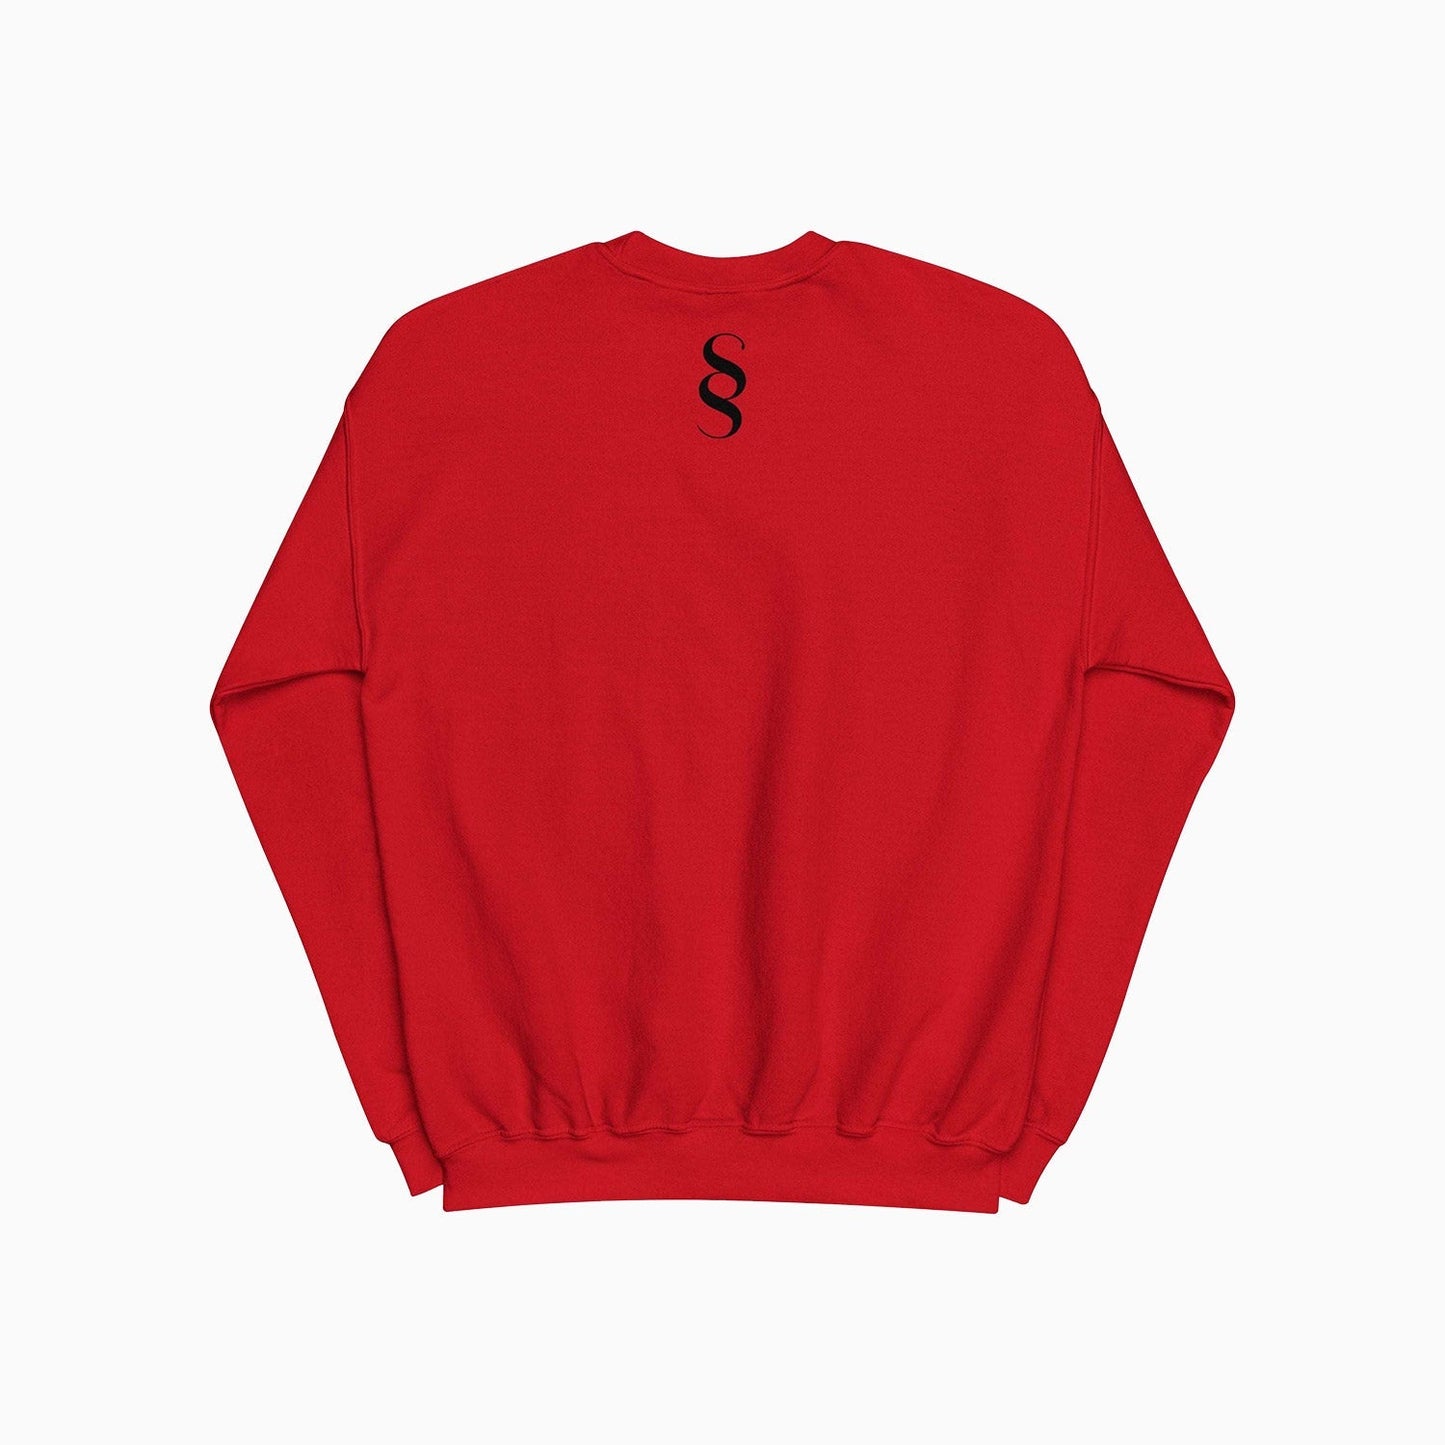 Men's Emblem Printed Red Sweatshirt